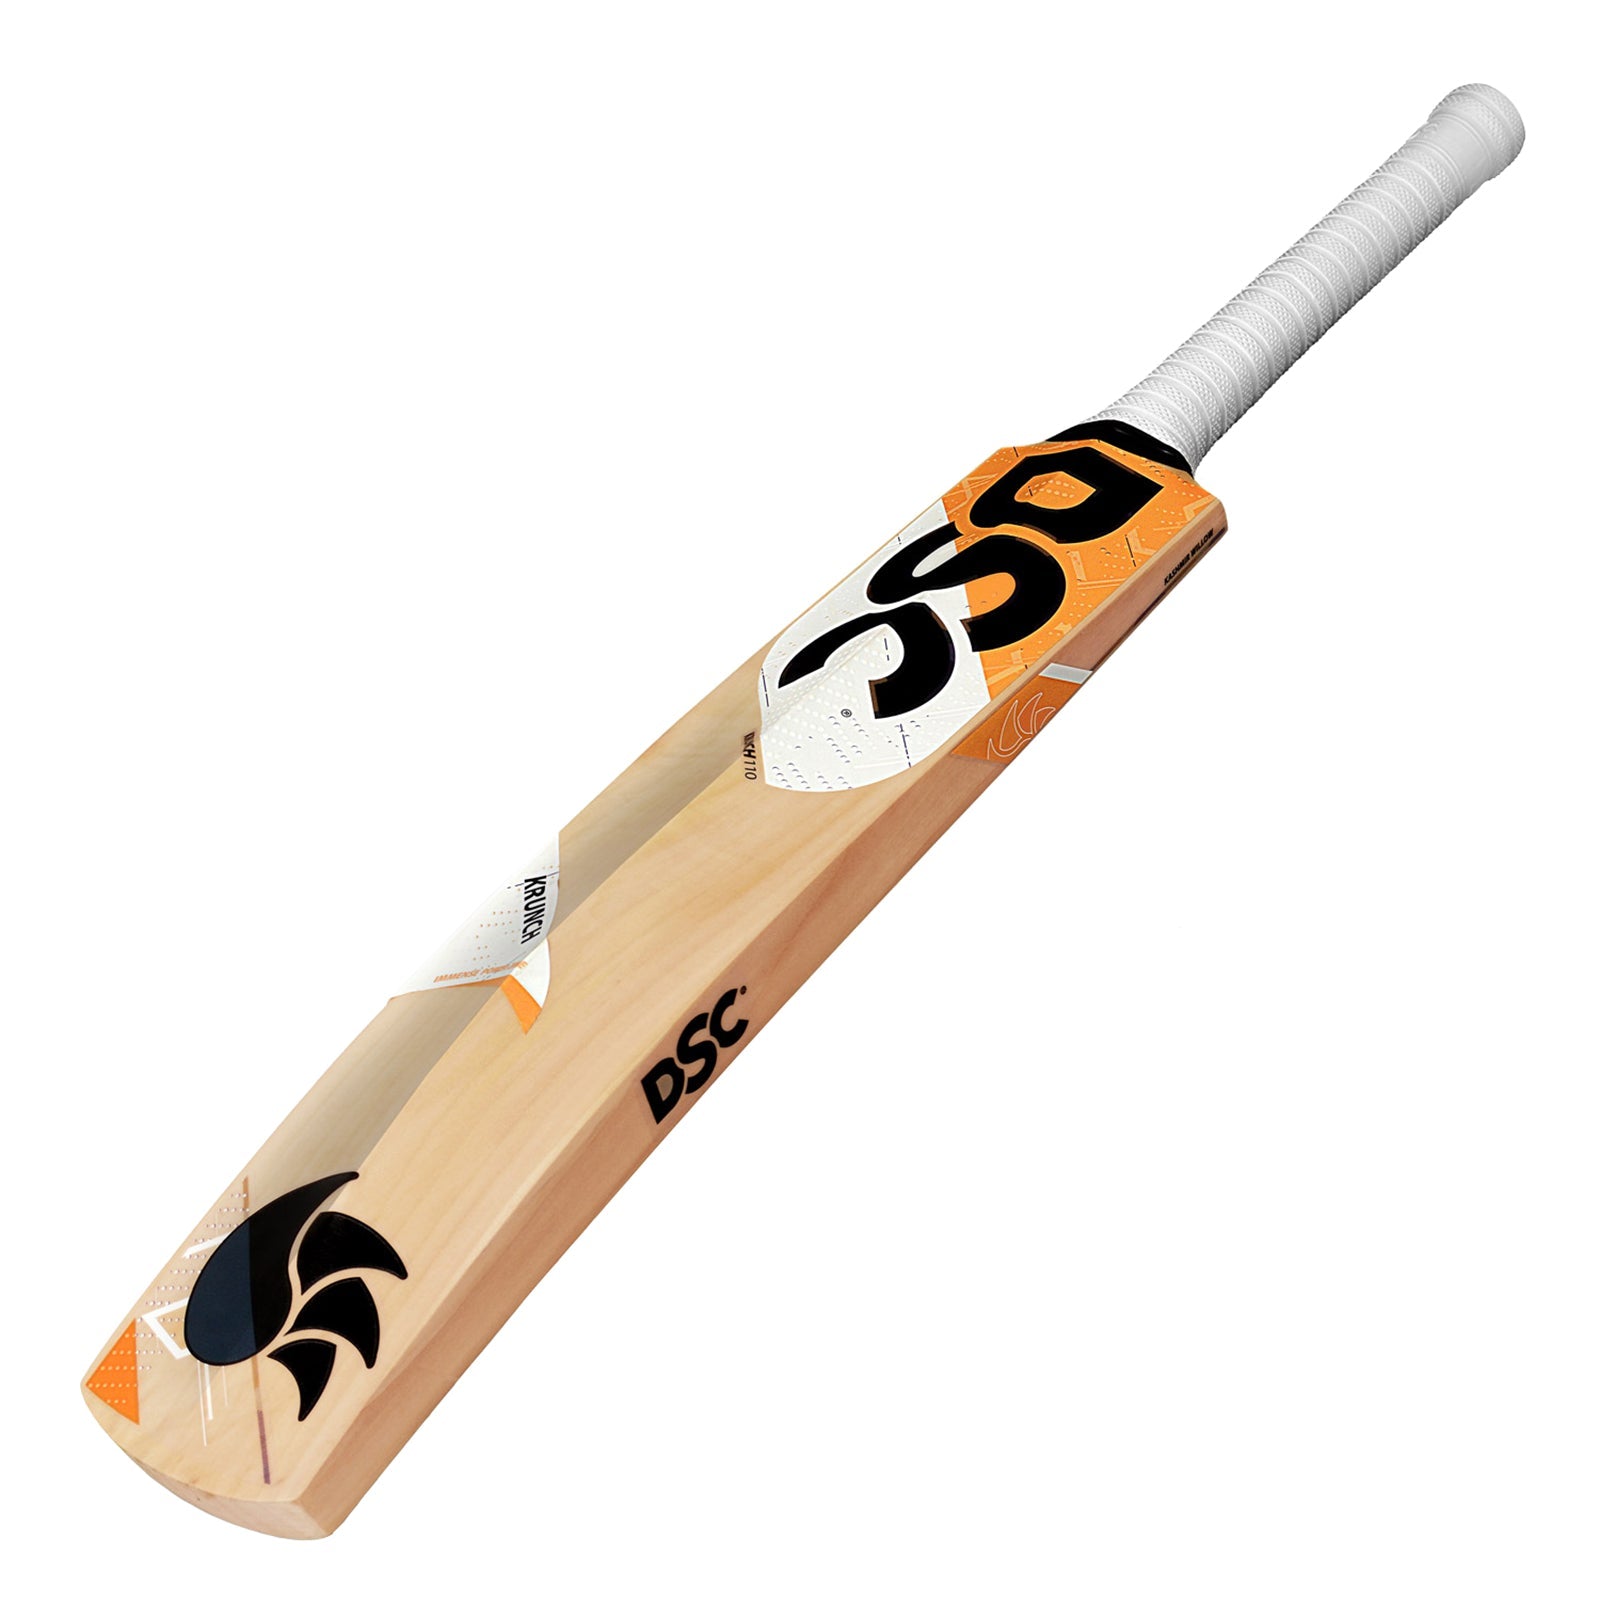 DSC Krunch 110 Kashmir Willow Cricket Bat - Size 0